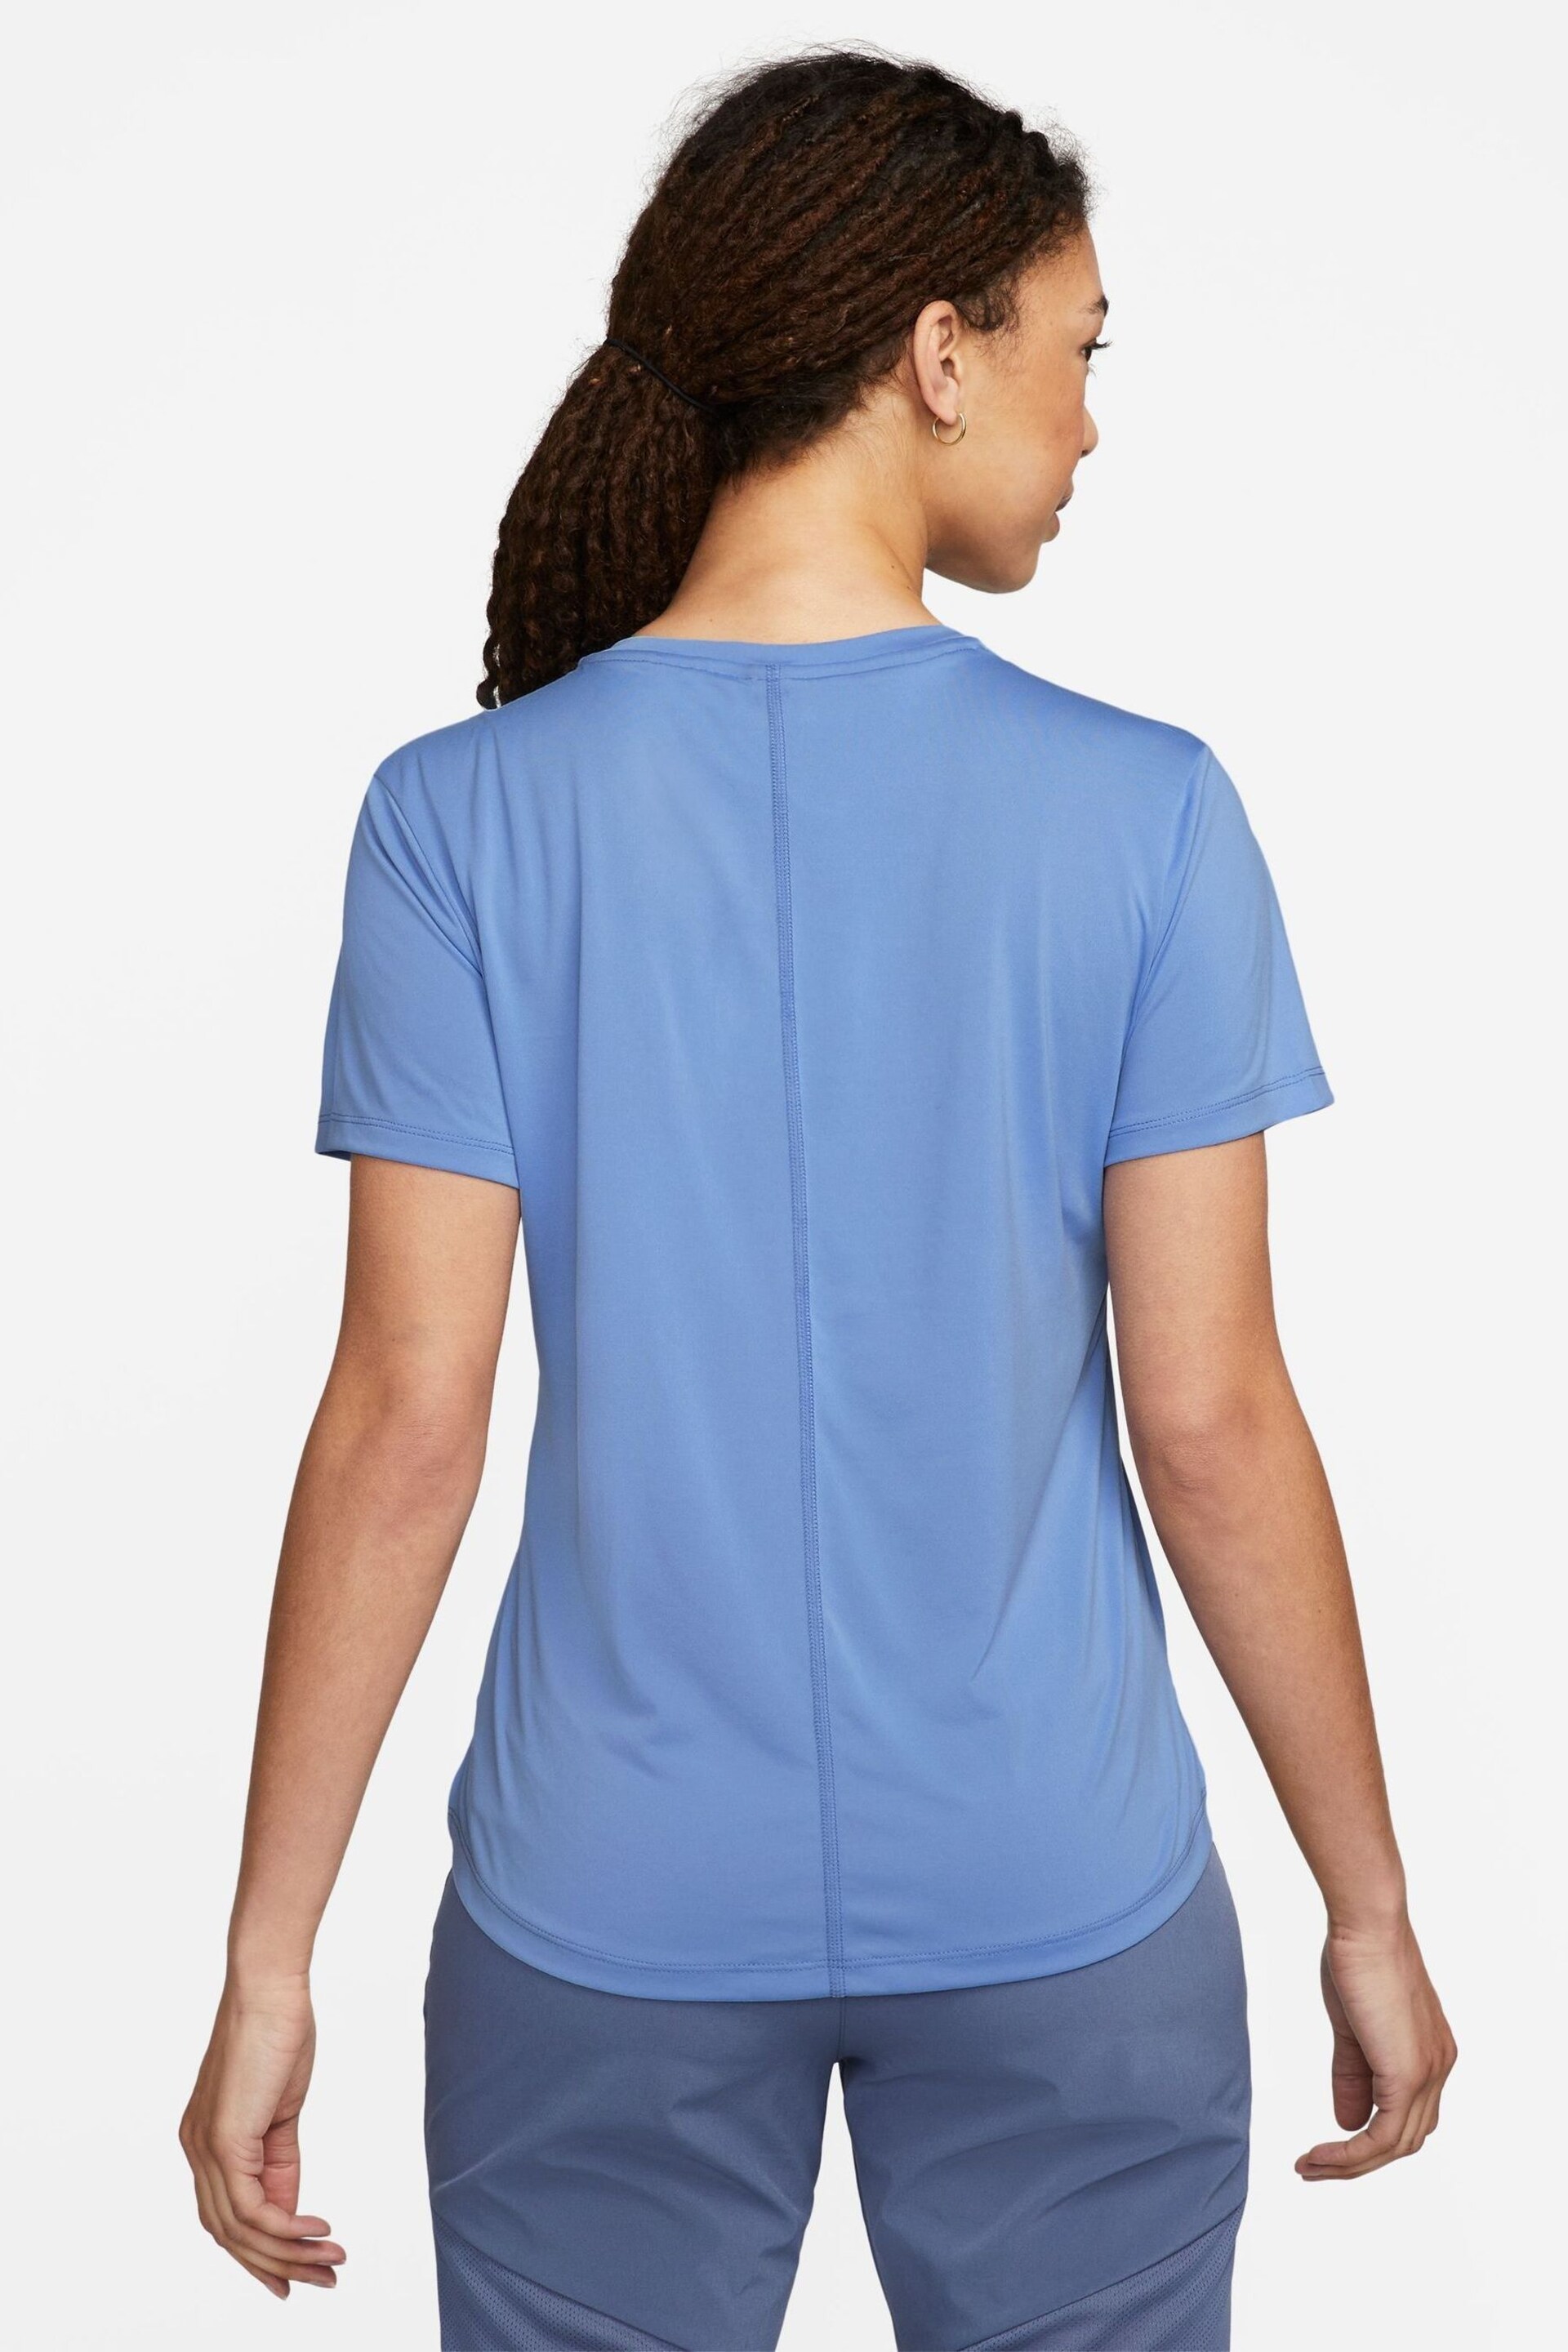 Nike Blue Dri-FIT Swoosh Short-Sleeve Running Top - Image 2 of 3